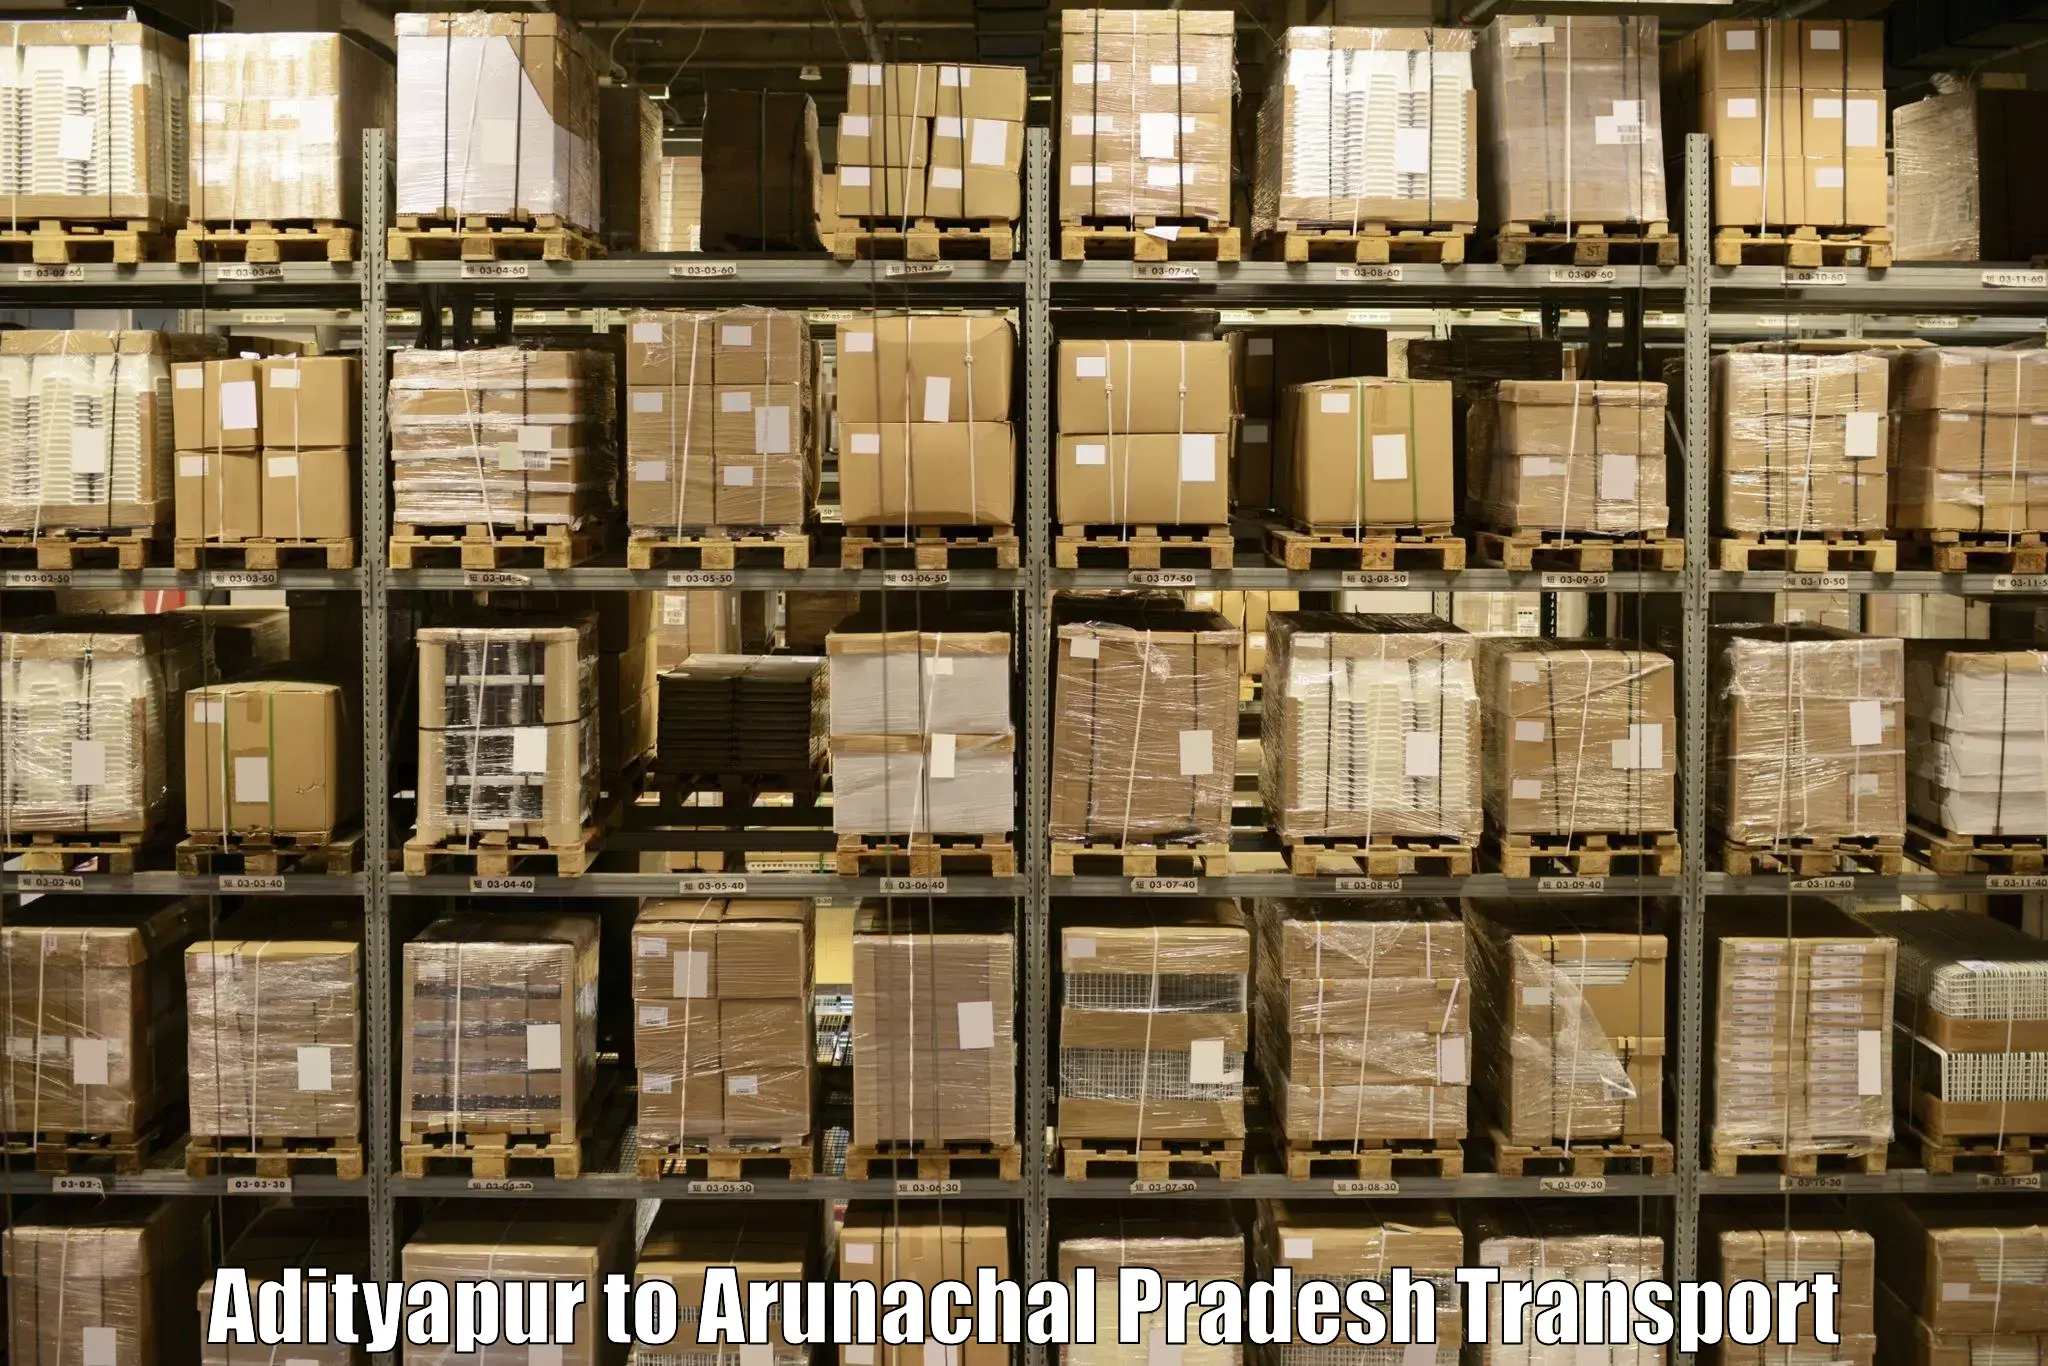 Truck transport companies in India Adityapur to Boleng